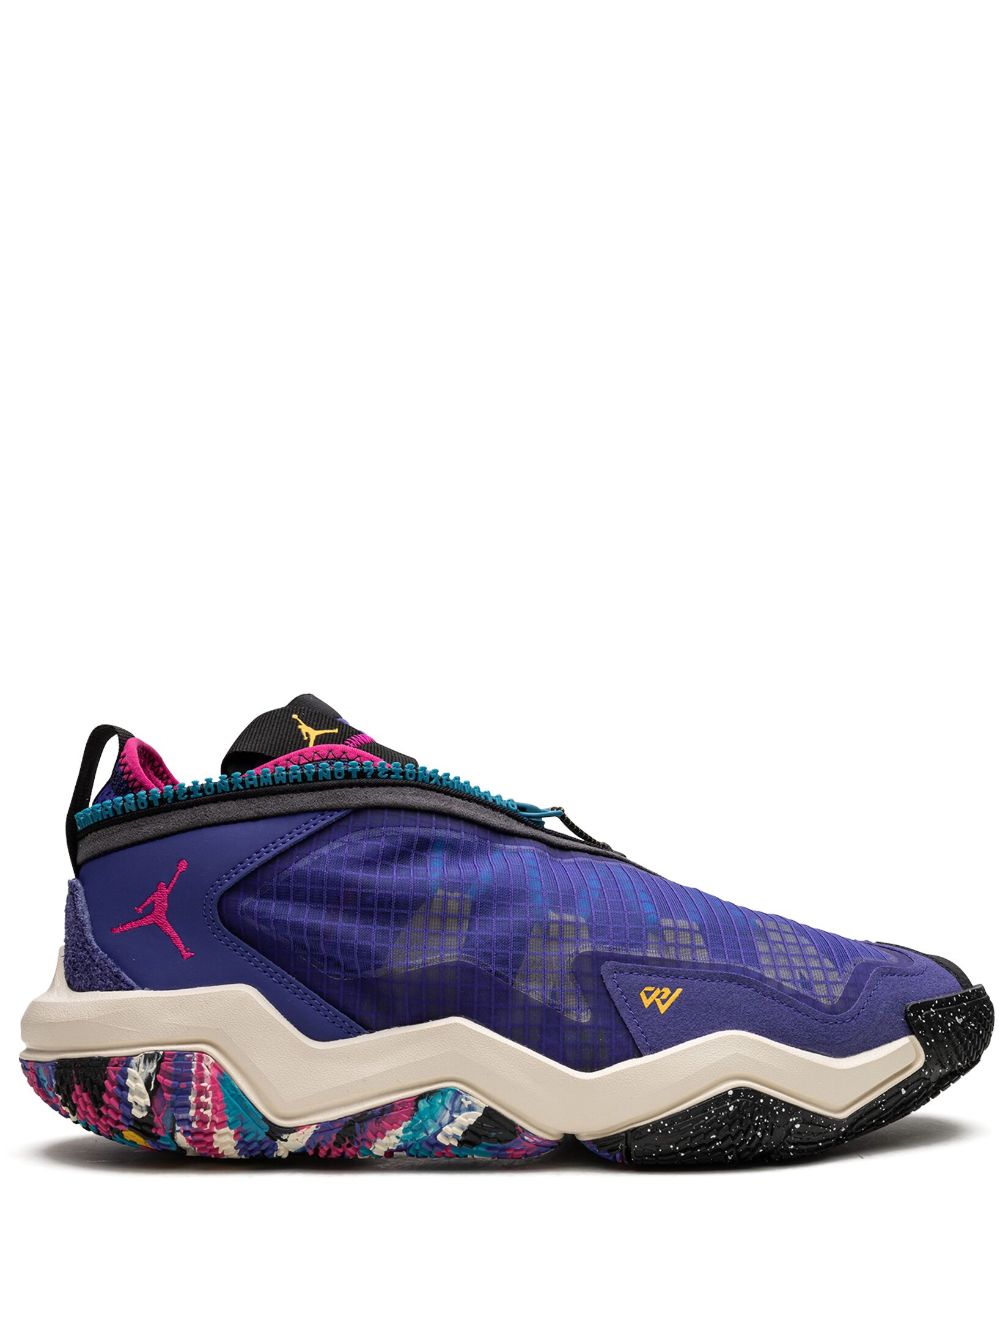 Jordan Why Not Zer0.6 "Bright Concord" sneakers - Purple von Jordan